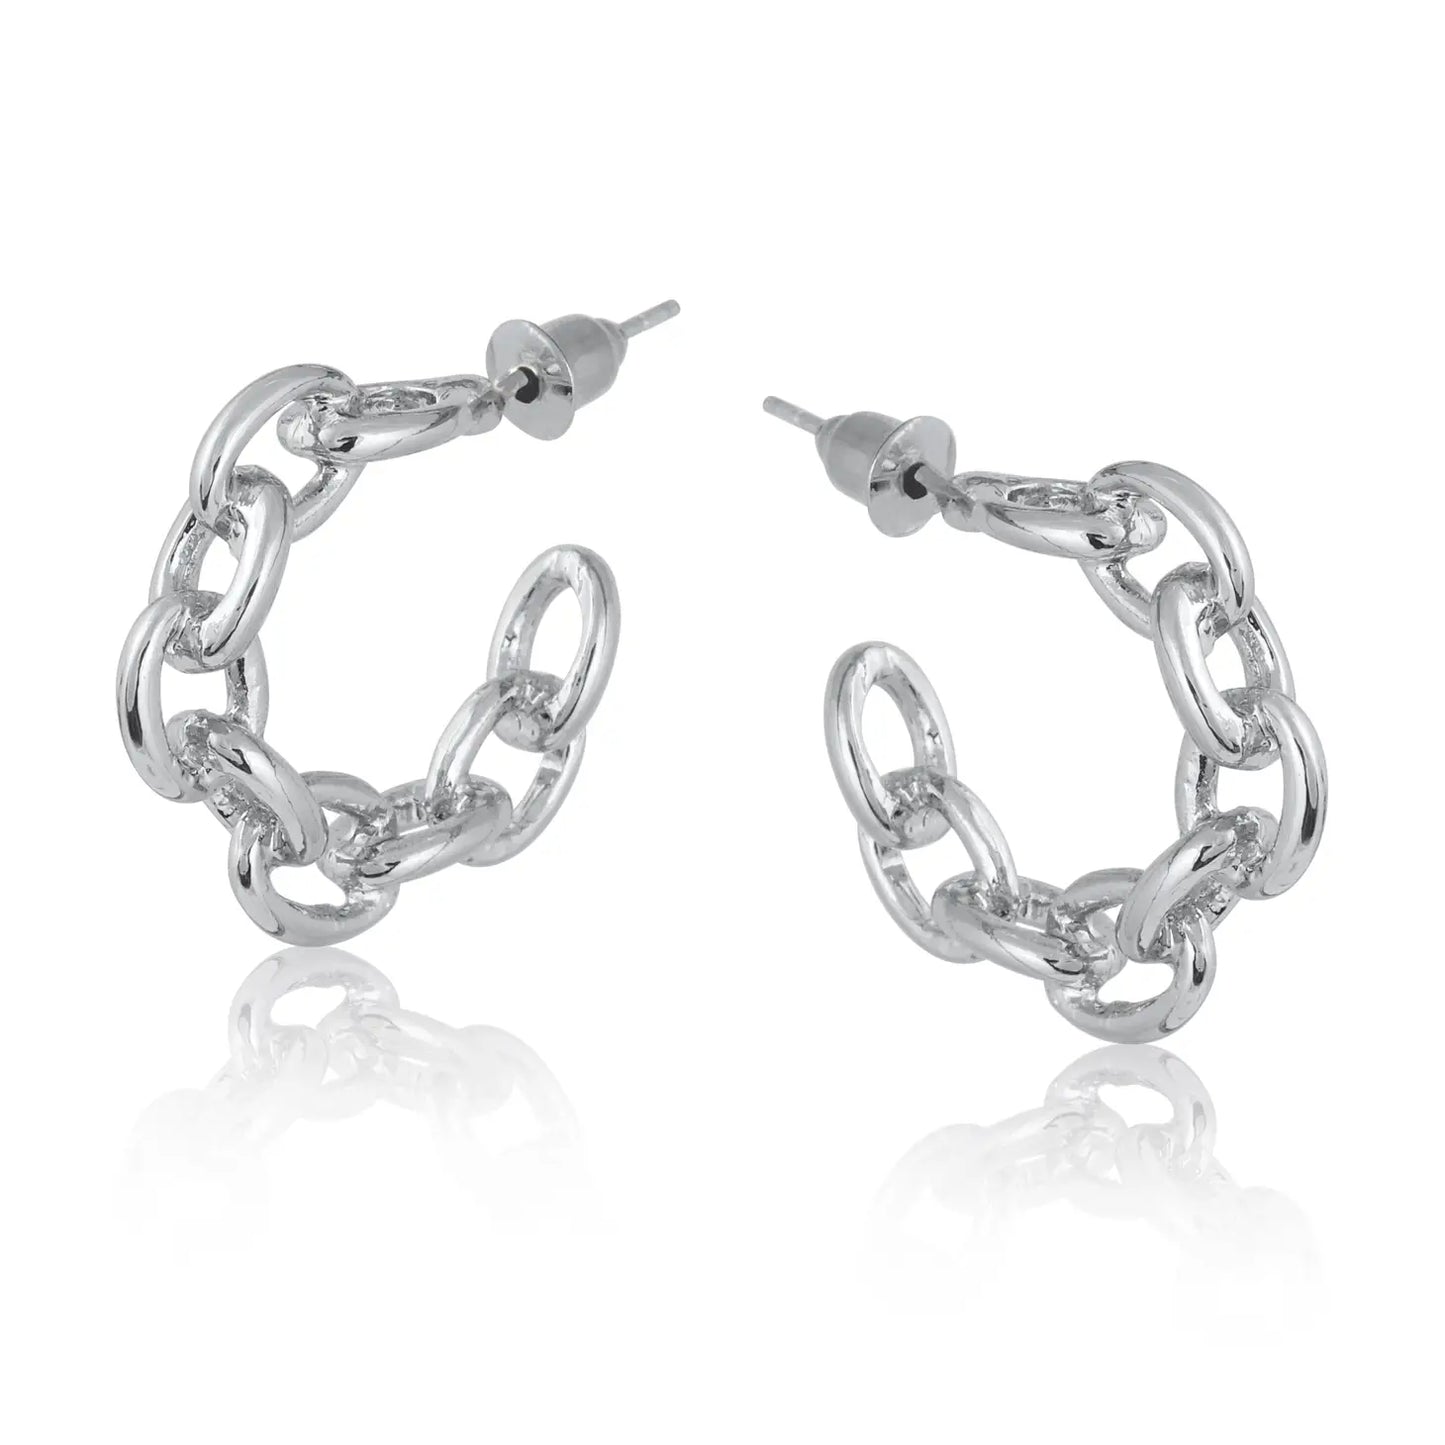 Chain earrings - Samantha